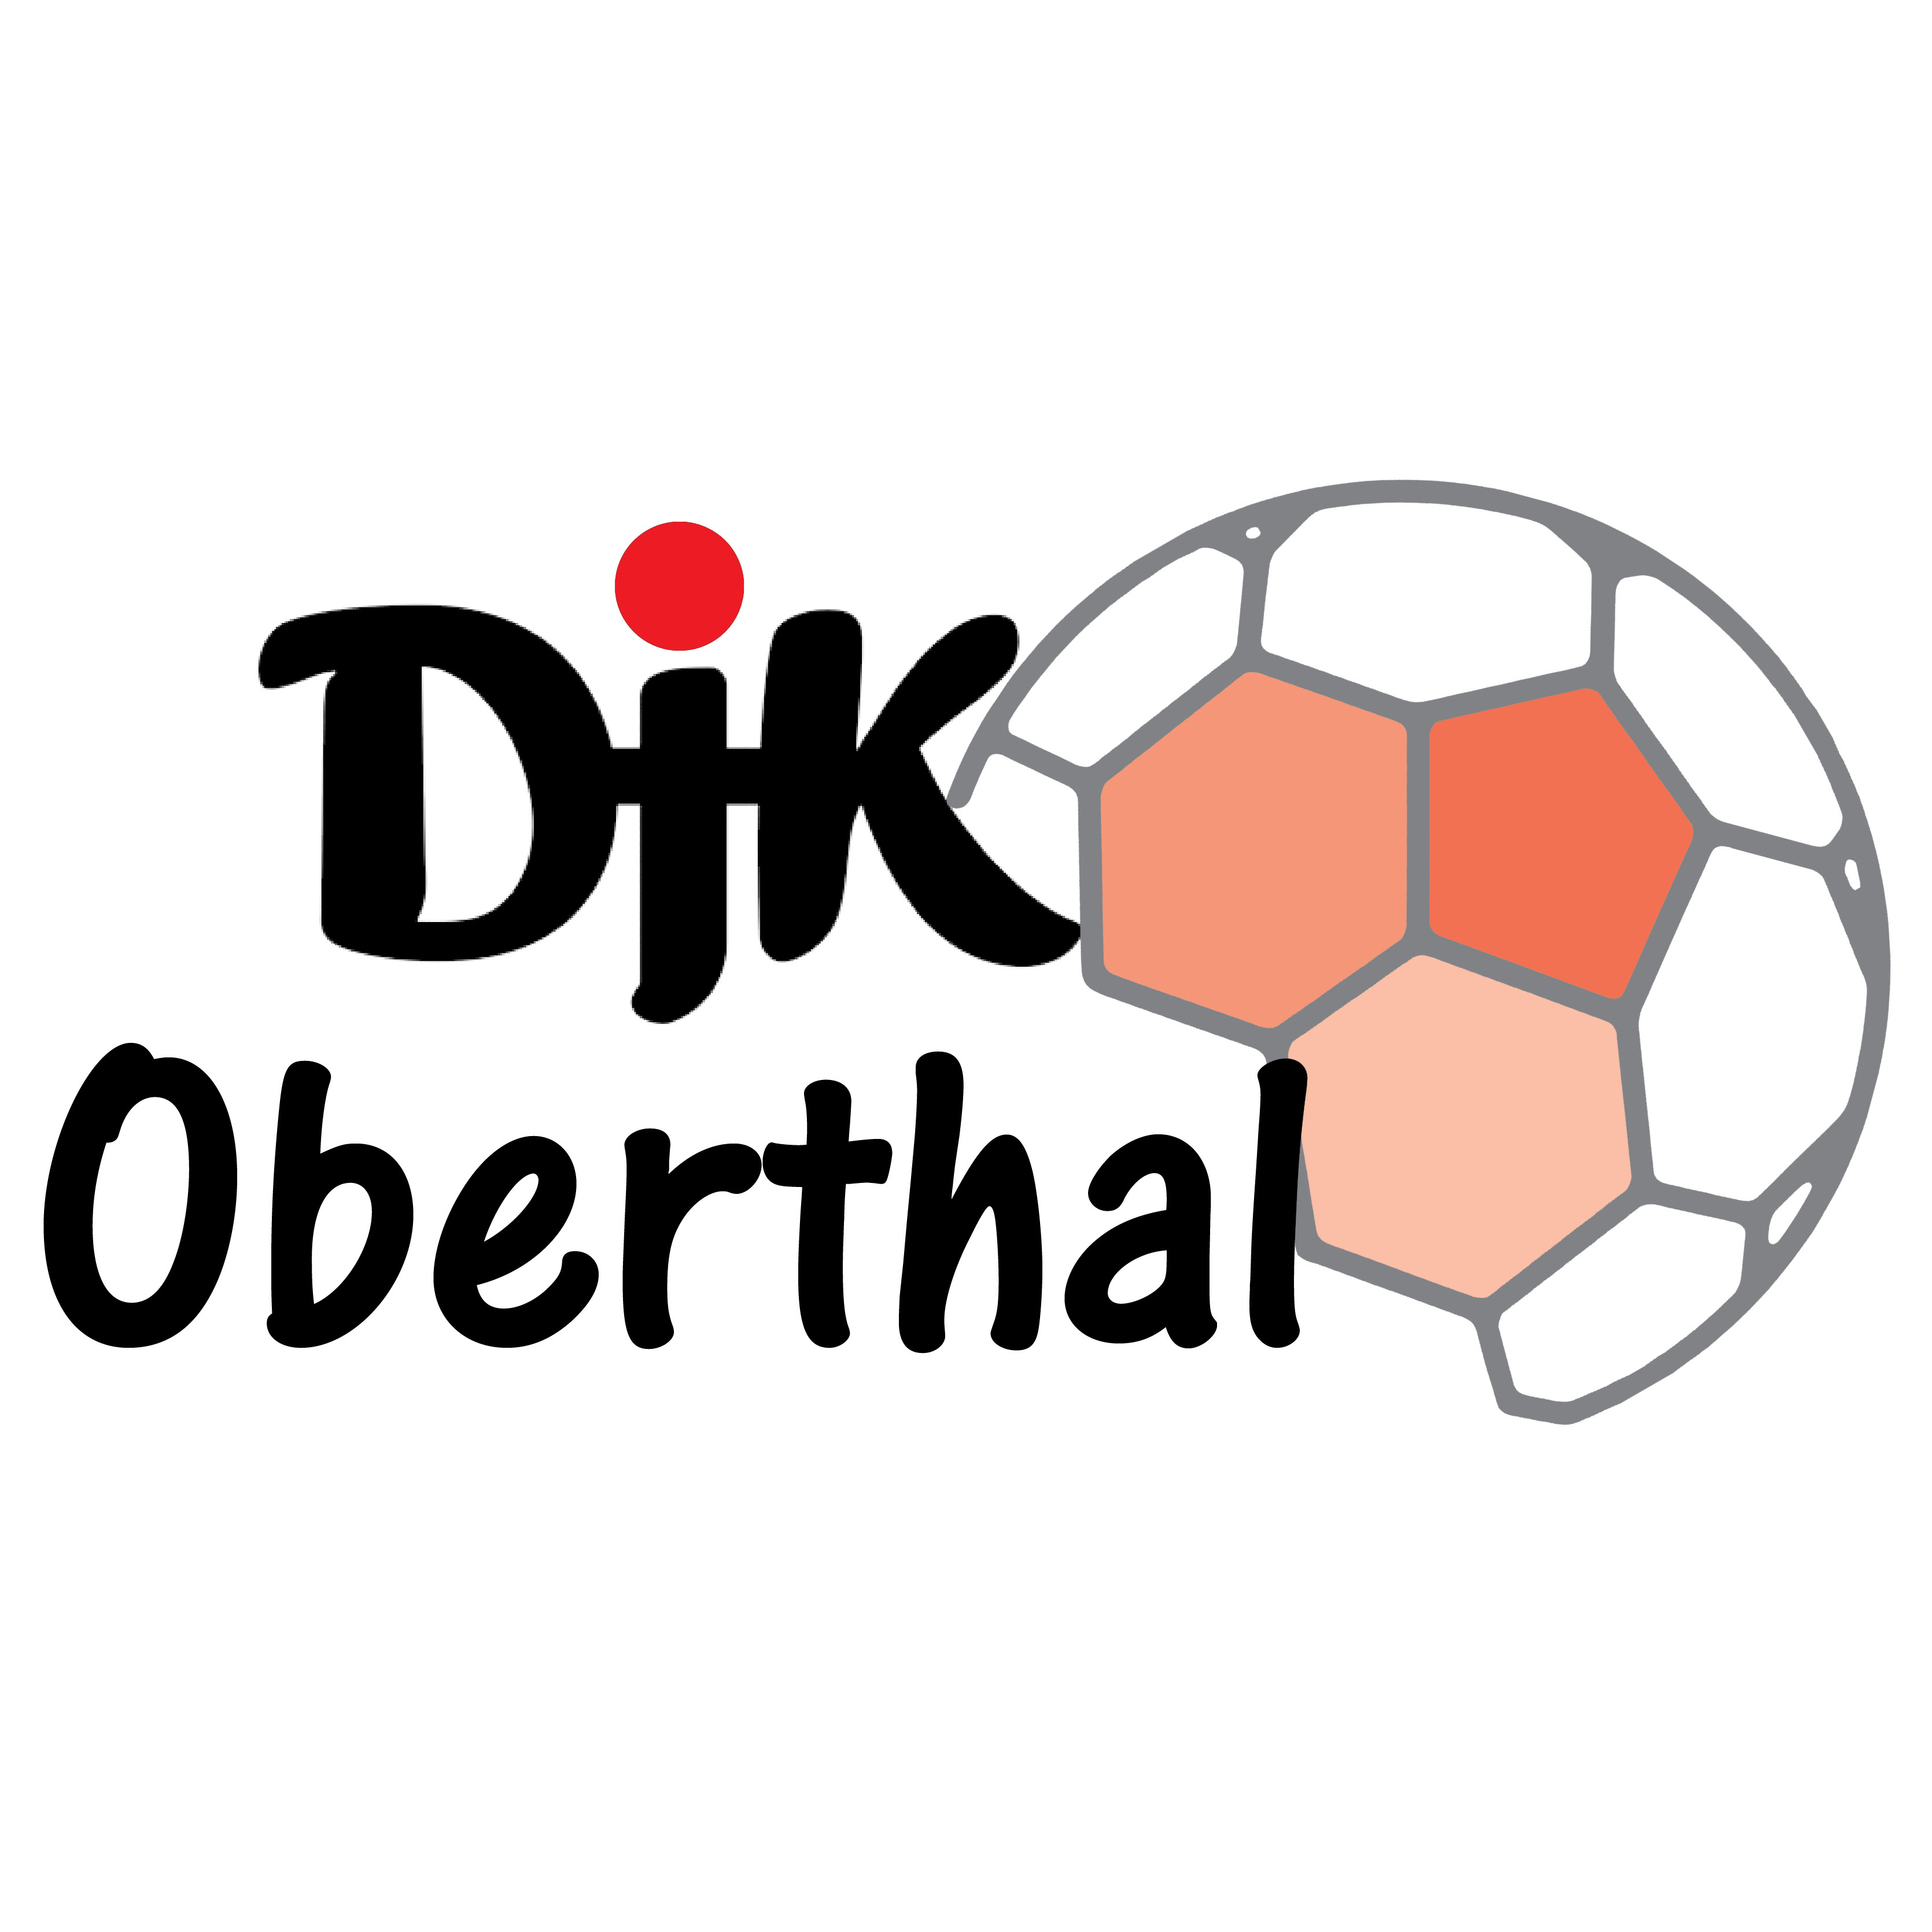 DJK Oberthal 2